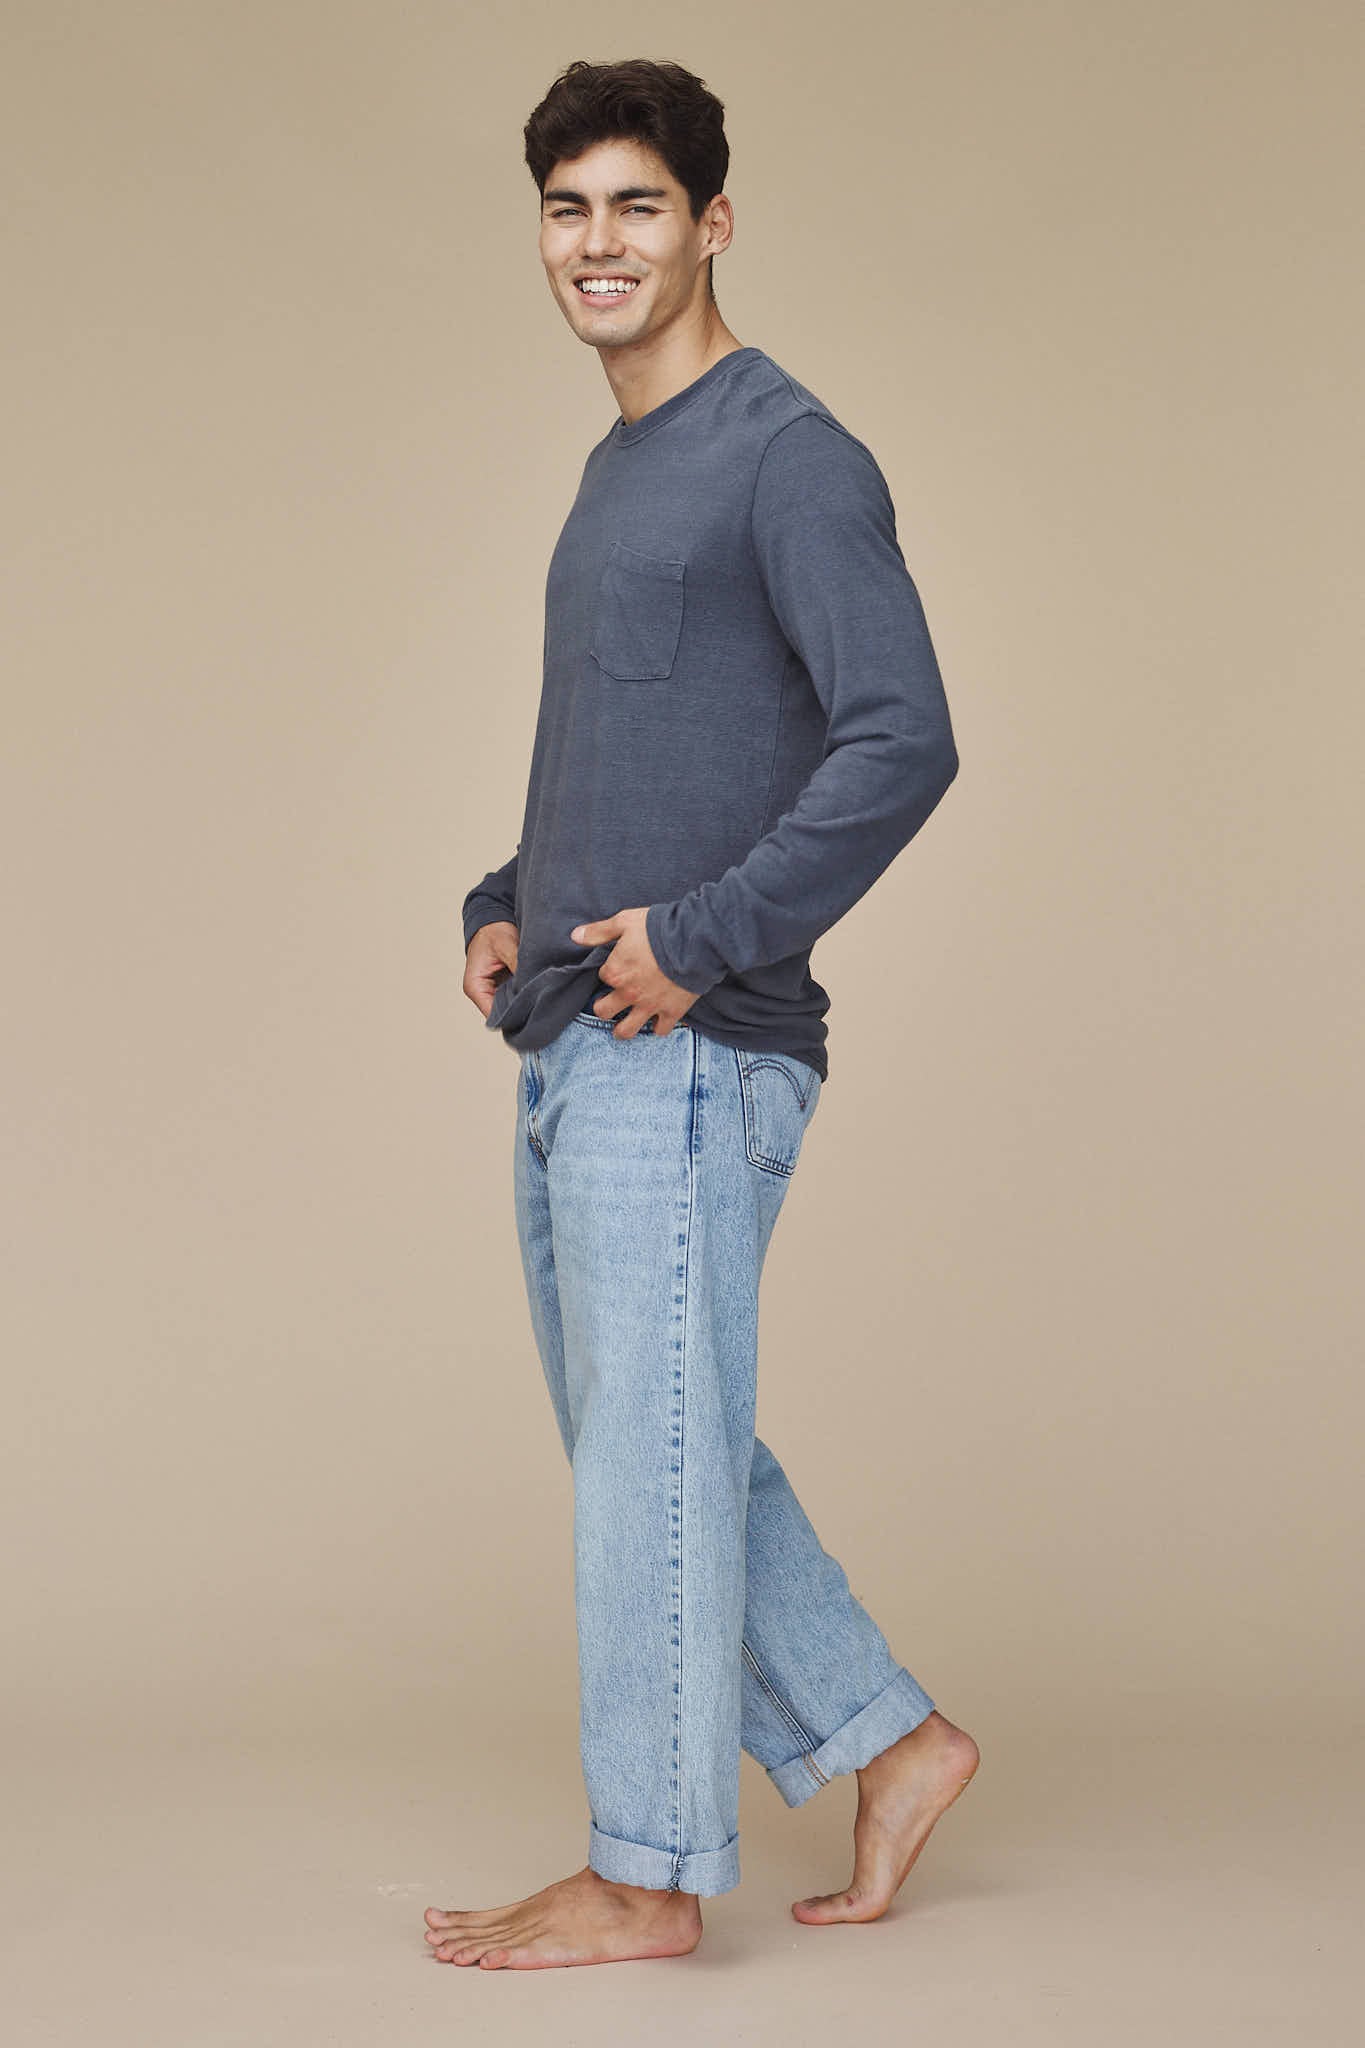 Baja Long Sleeve Pocket Tee | Jungmaven Hemp Clothing & Accessories / model_desc: Henry is 6’0” wearing L